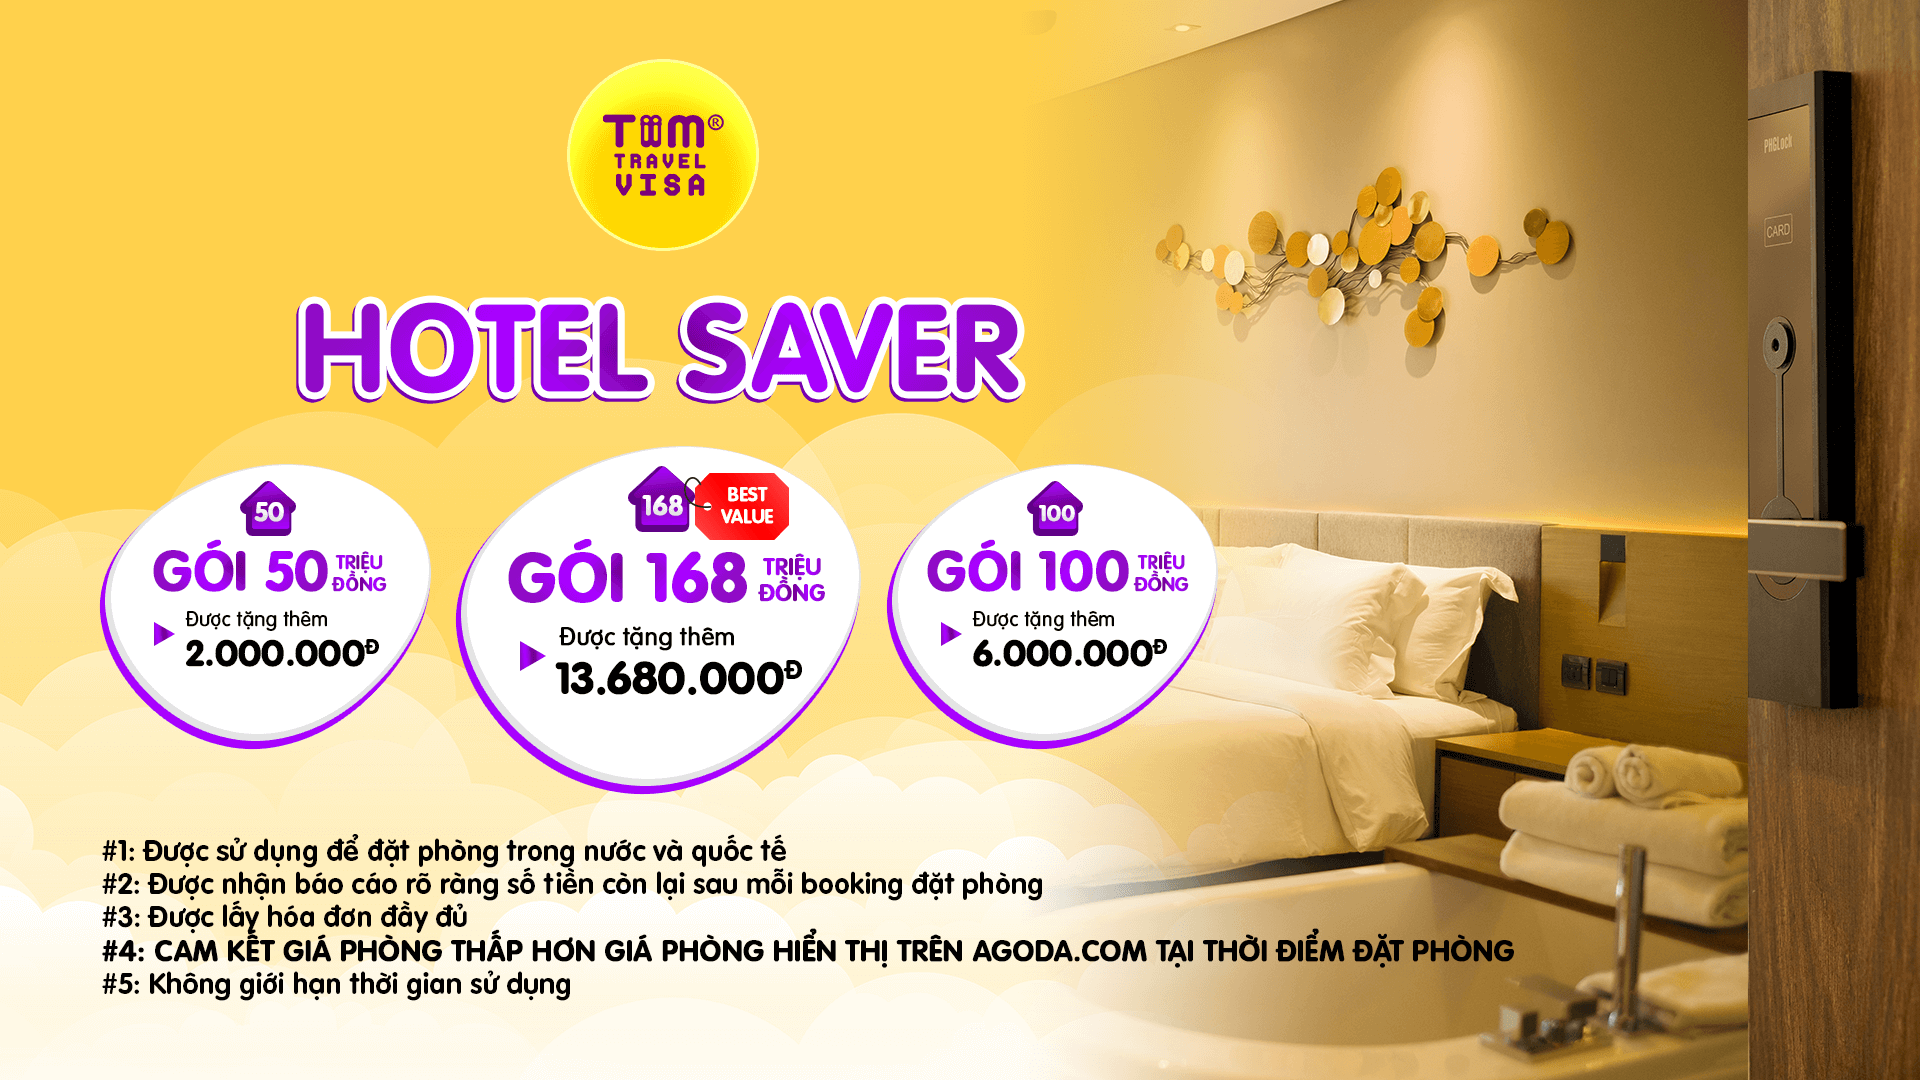 Hotel Saver by Tiim